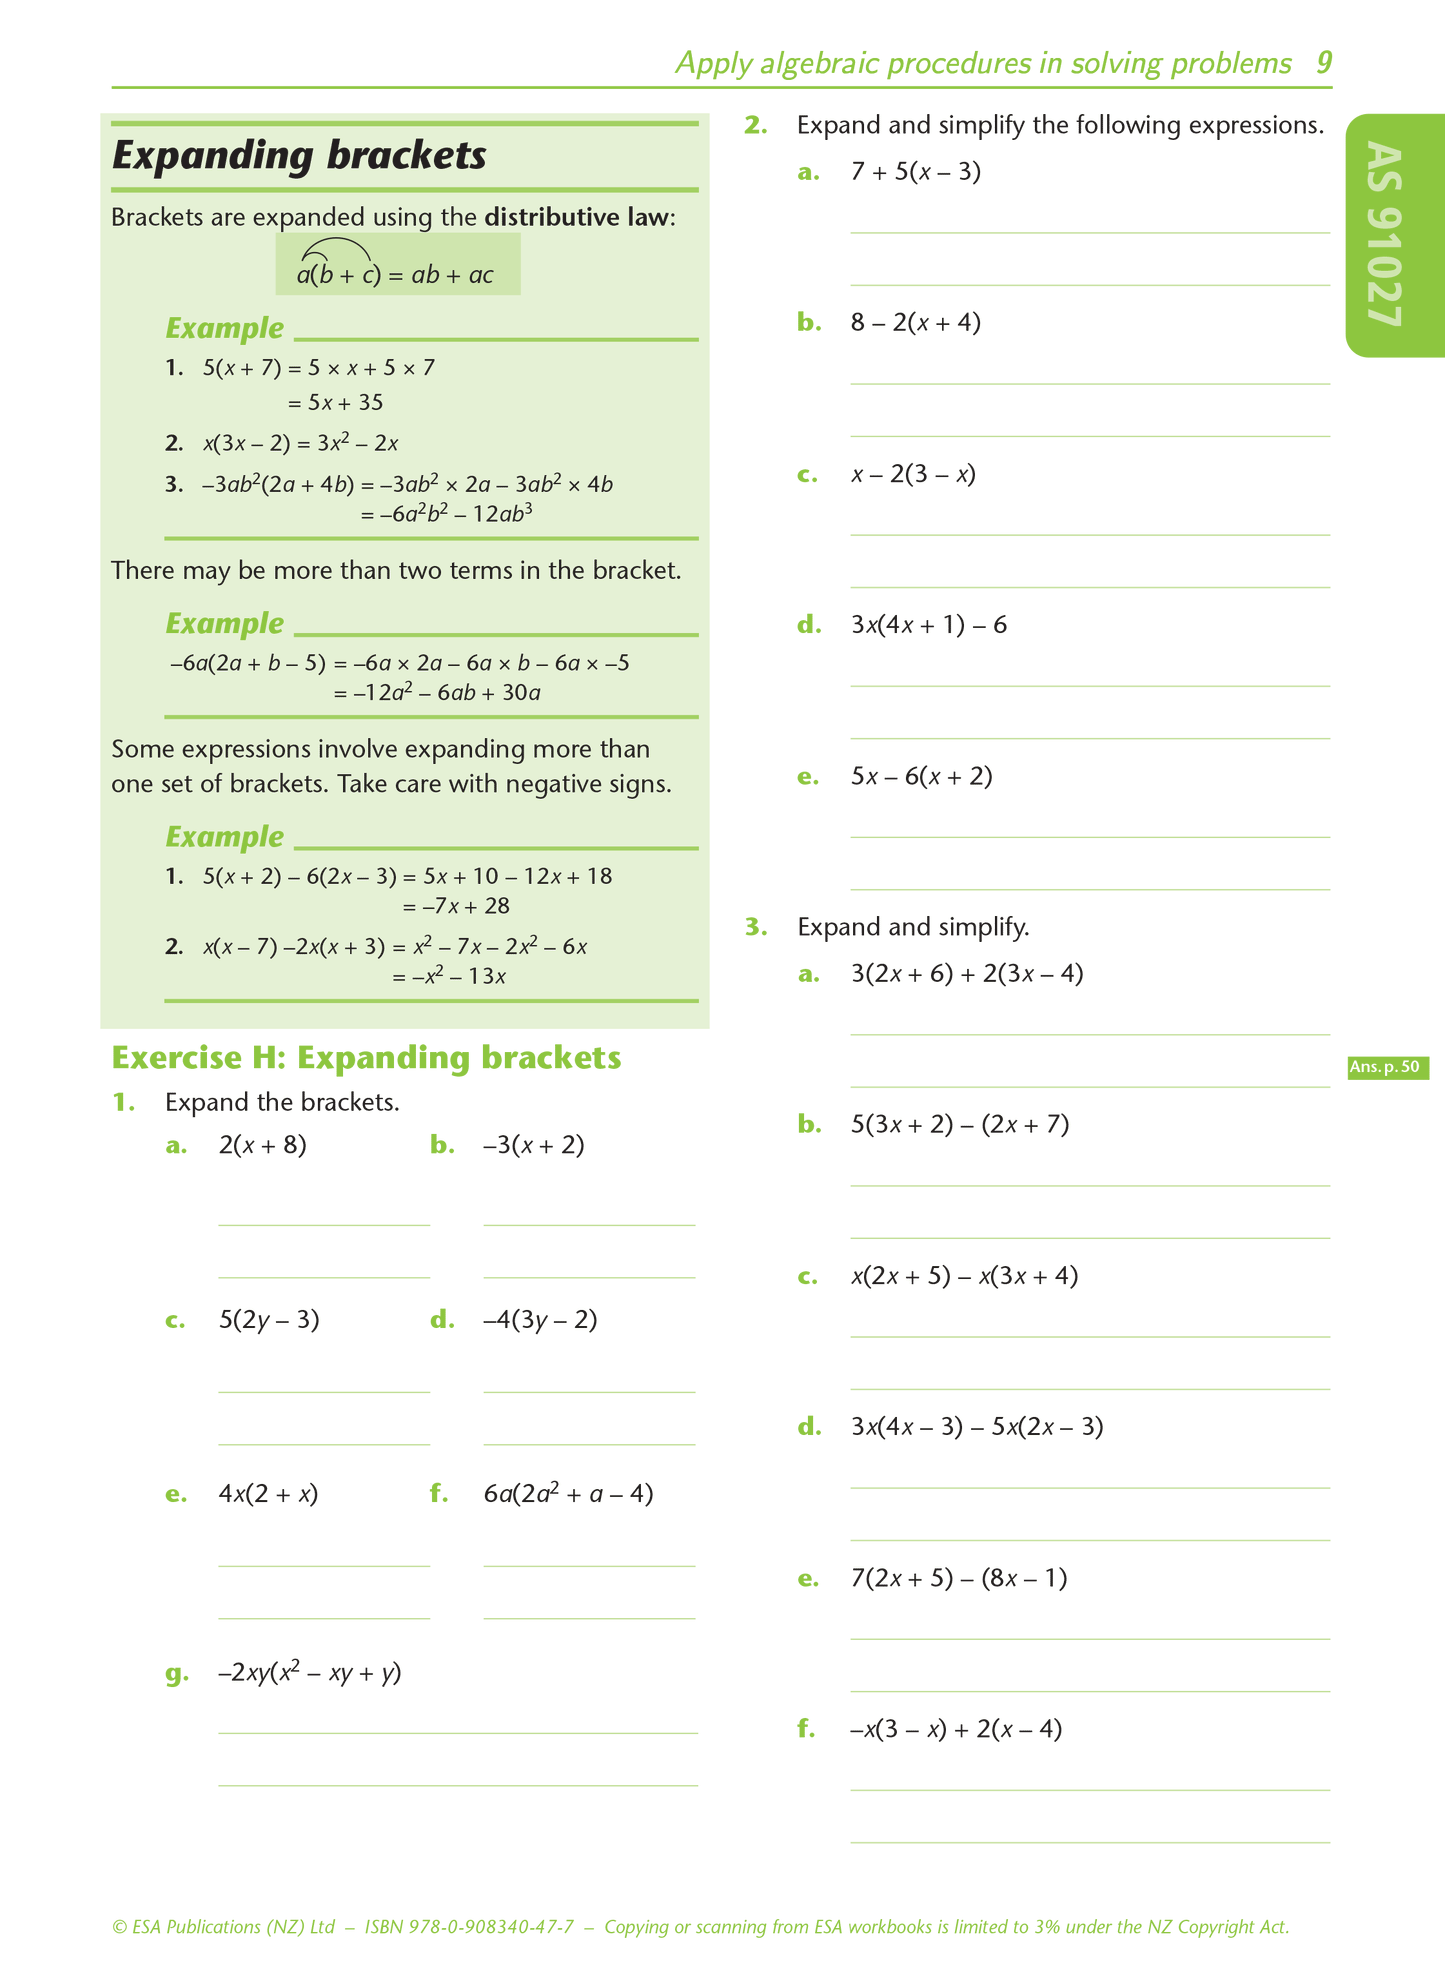 Level 1 Algebra 1.2 Learning Workbook